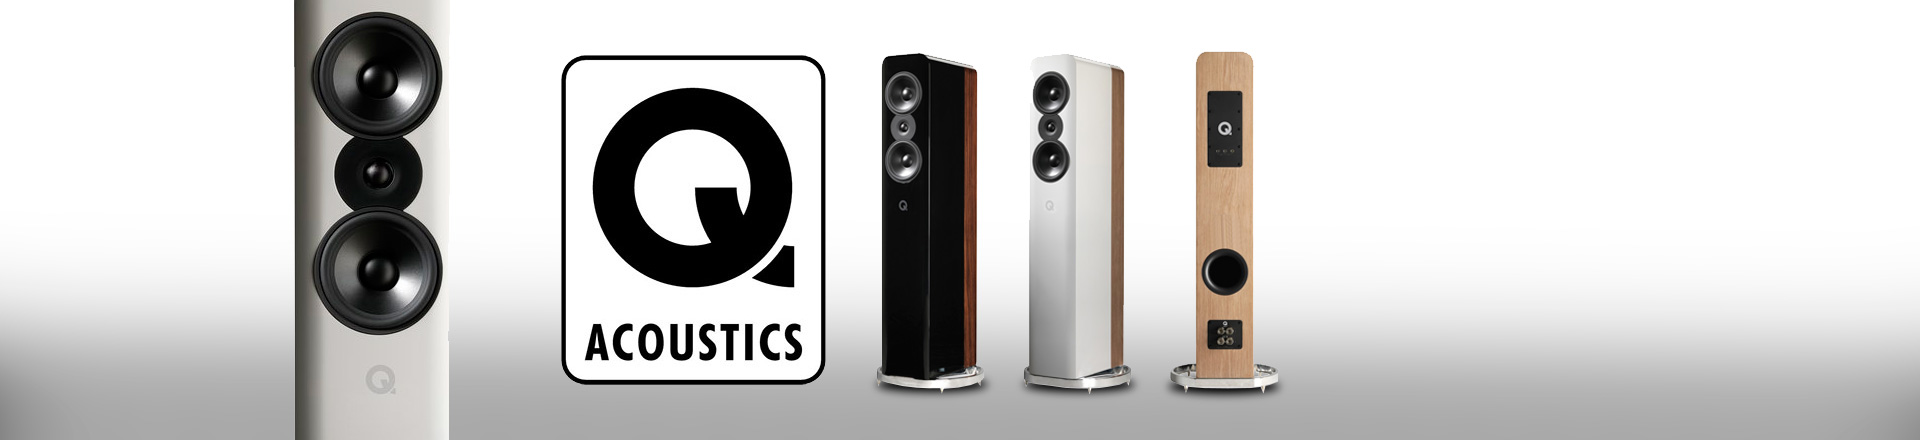 Q Acoustics - Concept 500